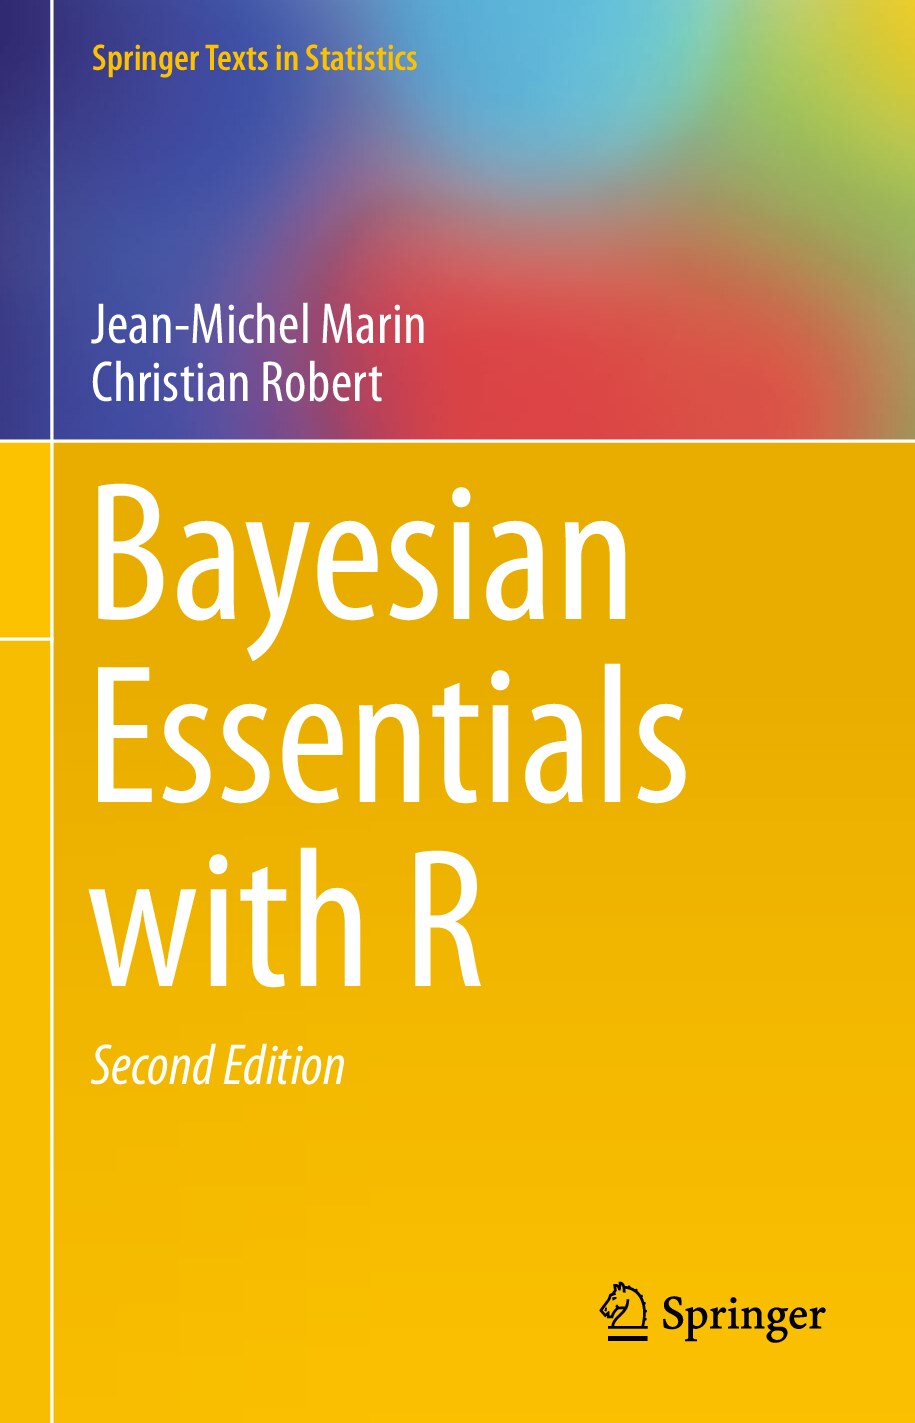 Bayesian Essentials with R, 2ed, Jean-Michel Marin, Christian Robert, 2013